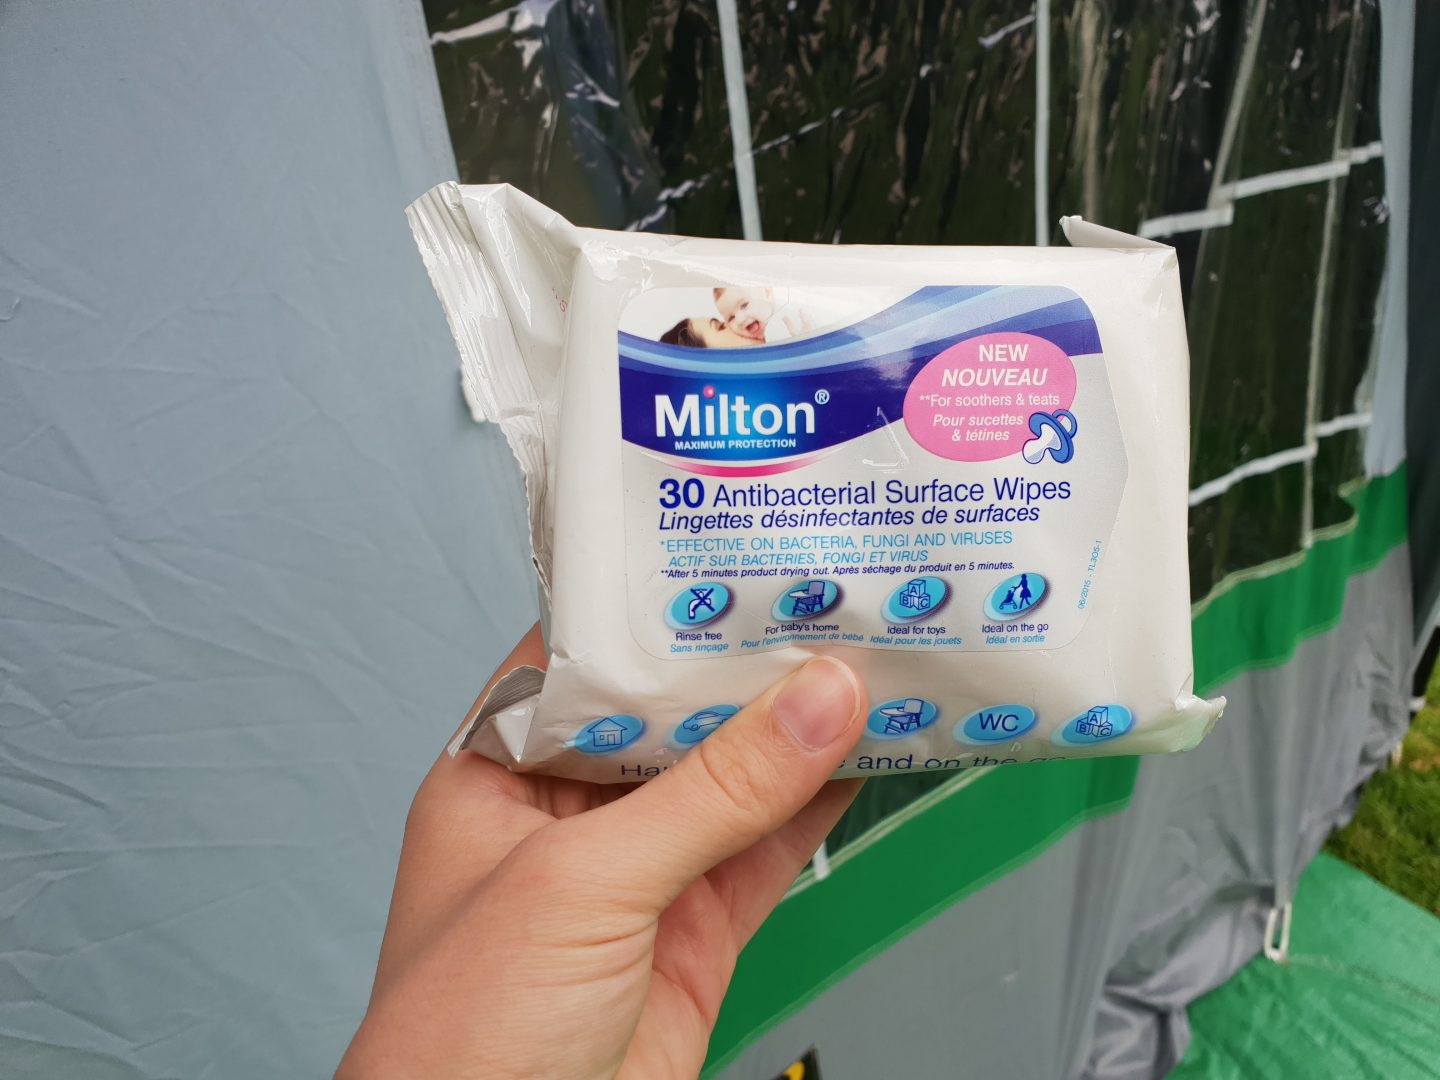 Milton anti-bacterial wipes